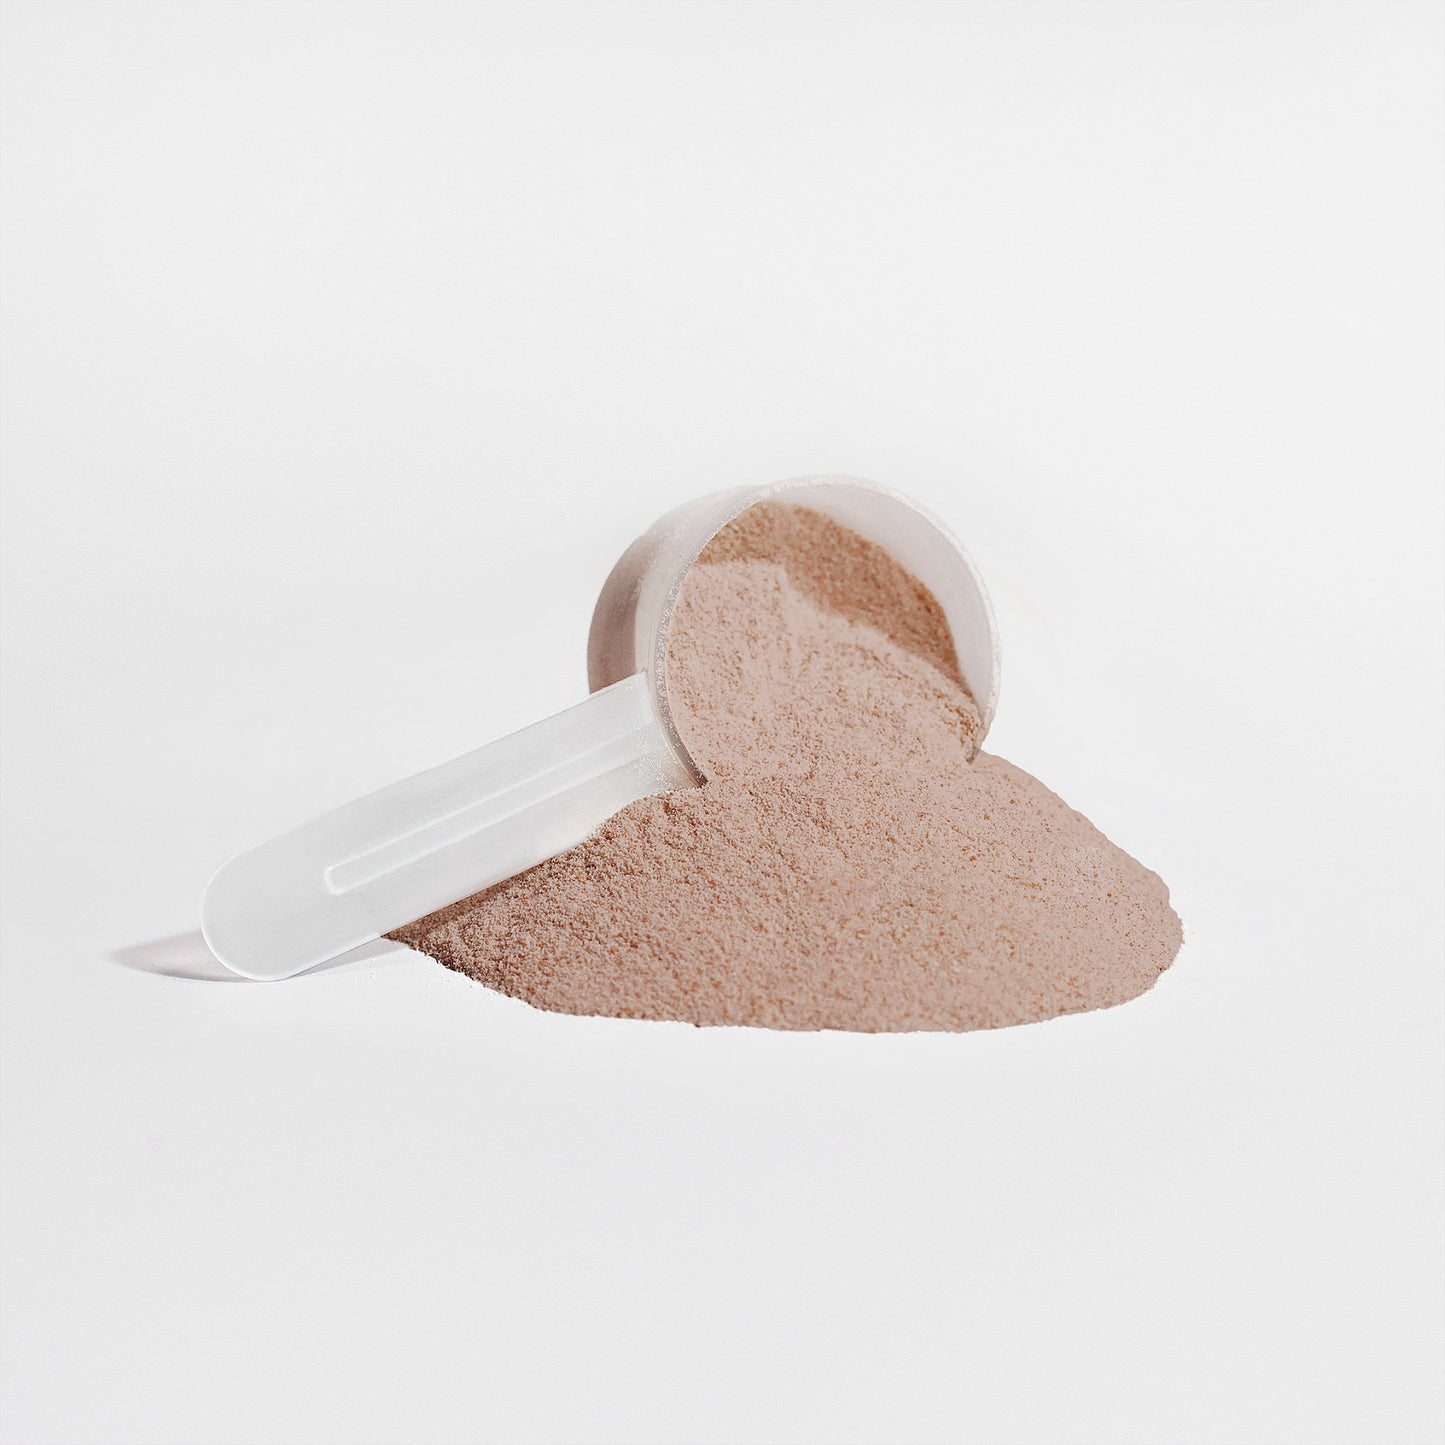 Chocolate flavored Vegan Pea Protein powder